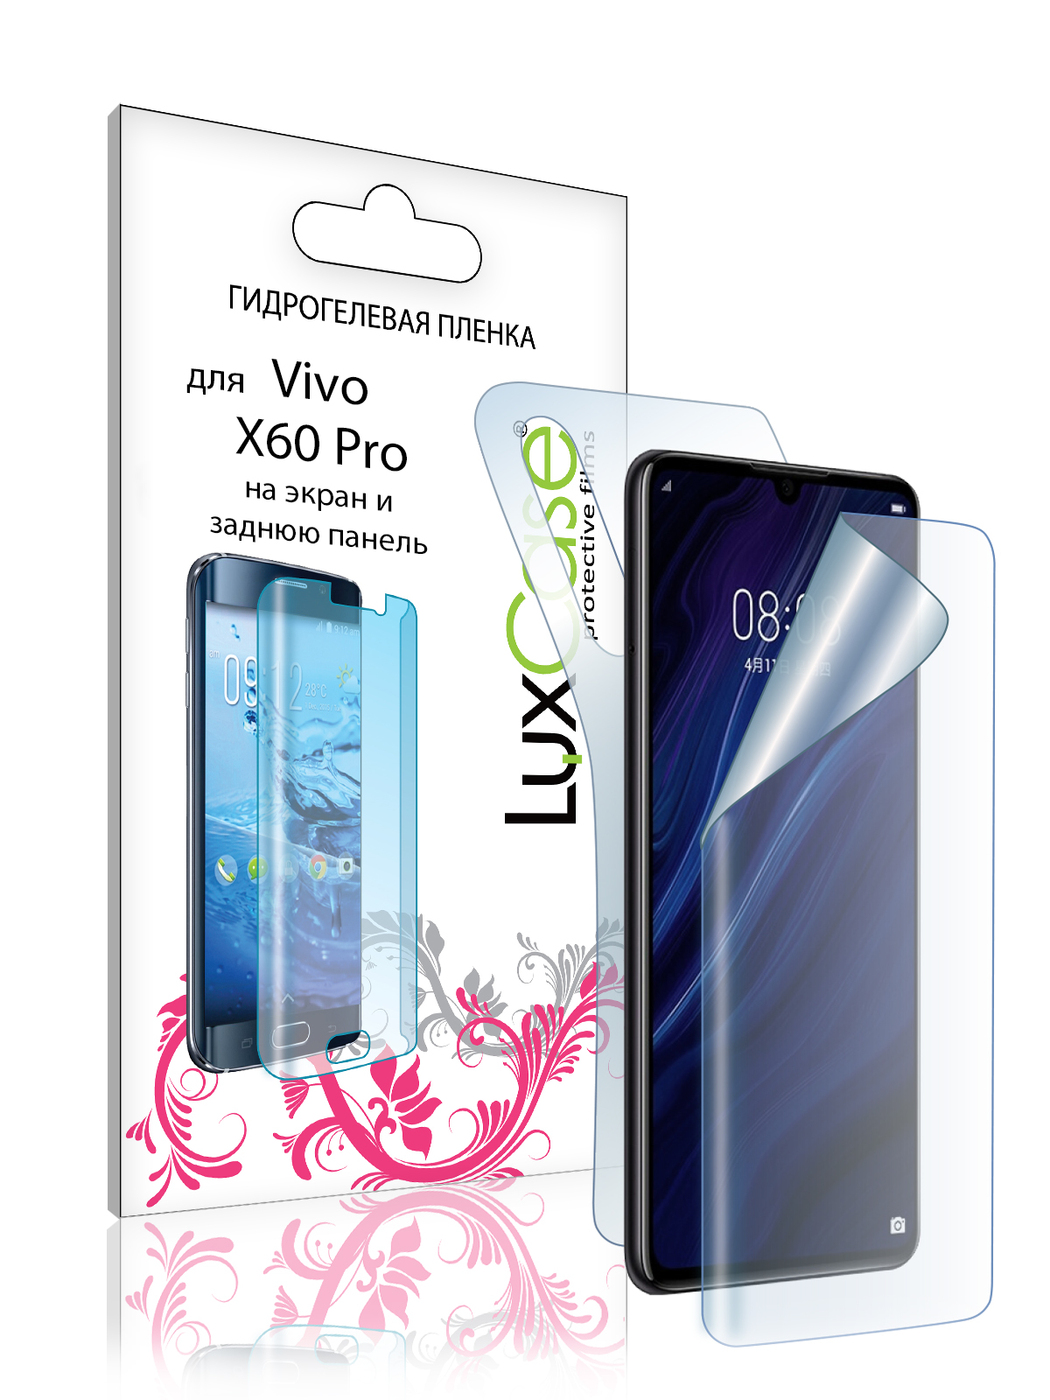 Пленка гидрогелевая LuxCase для Vivo X60 Pro Front and Back 0.14mm Transparent 86003 гидрогелевая пленка luxcase для vivo x60 pro front and back 0 14mm transparent 86003